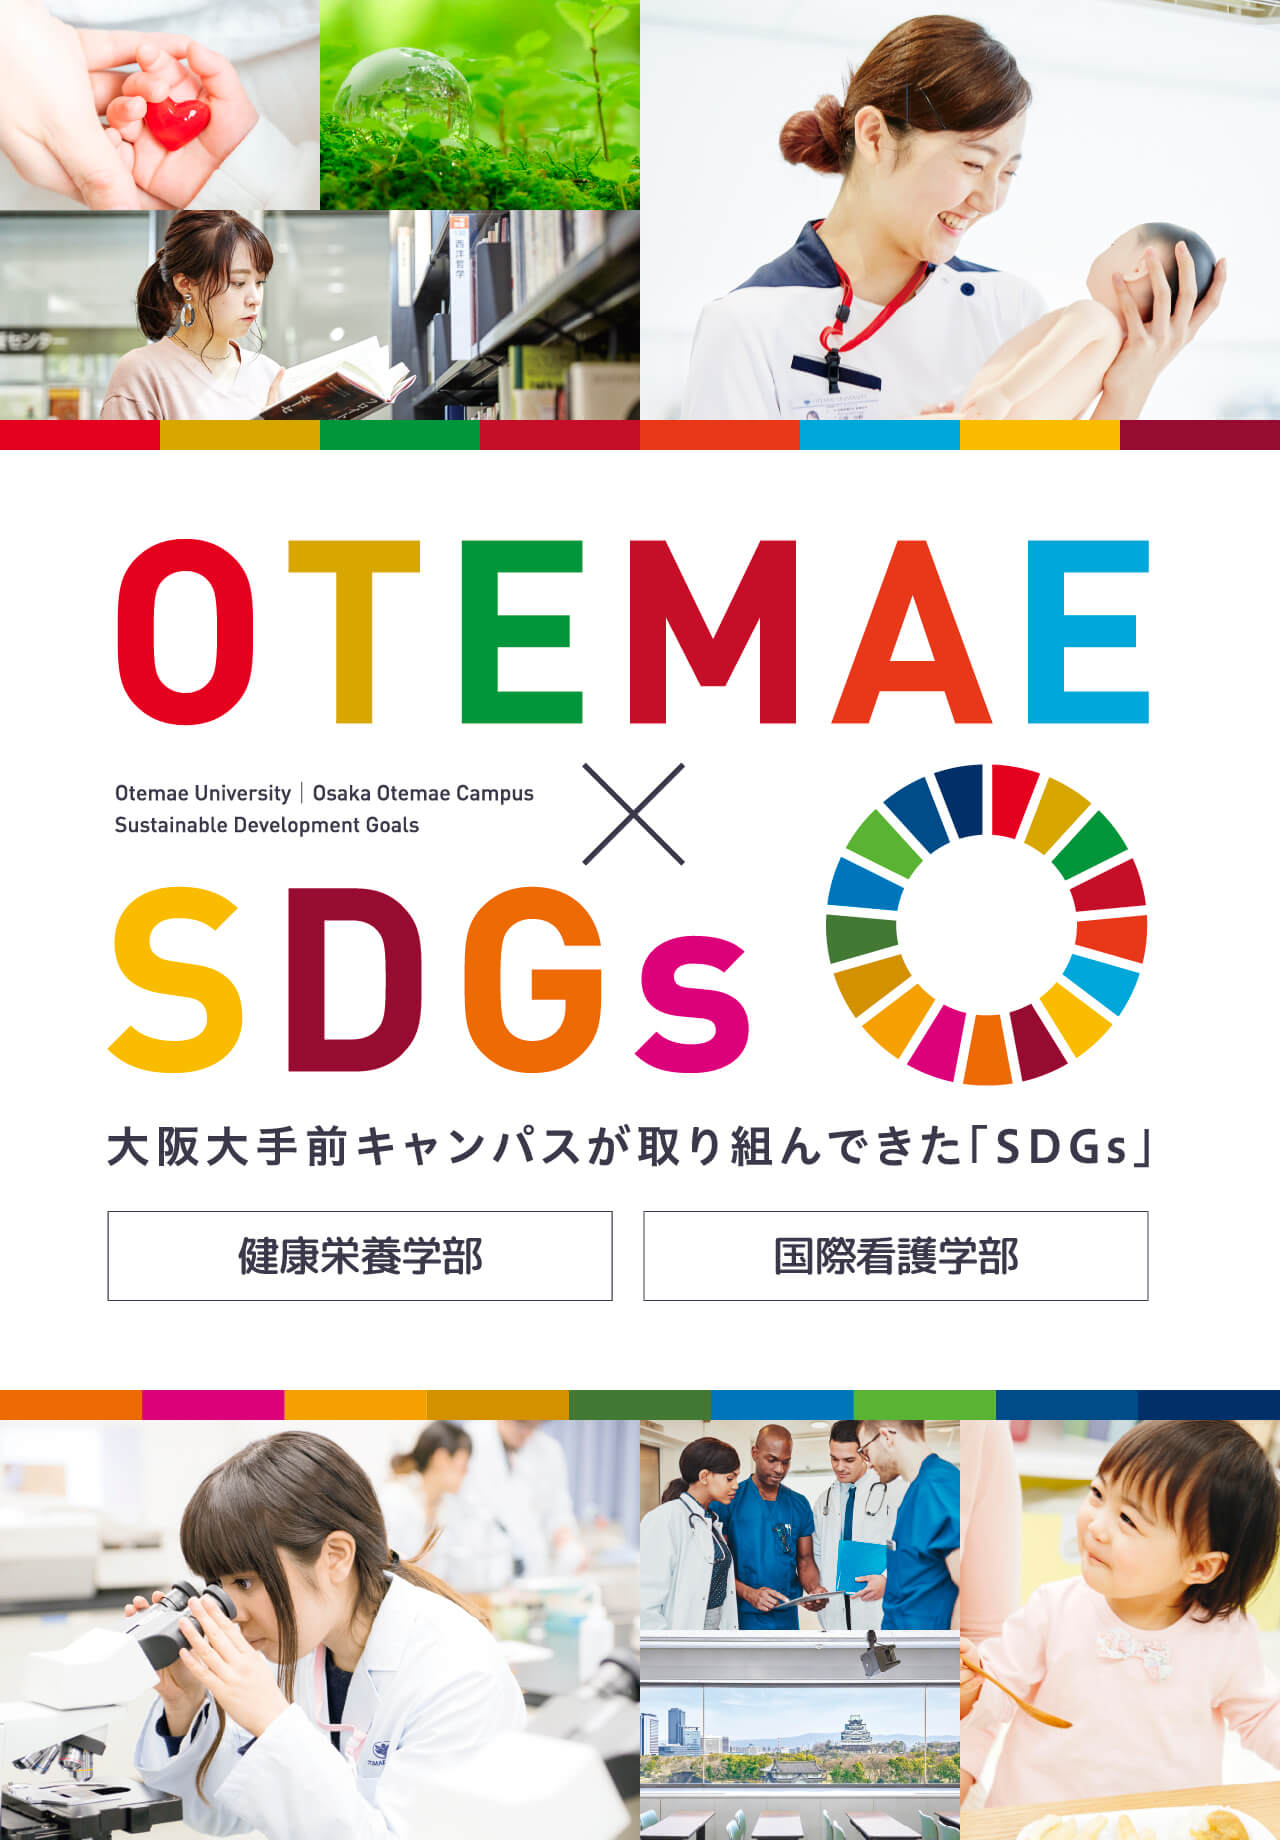 OTEMAExSDGs,Otemae University｜Osaka Otemae Campus Sustainable Development Goals,大阪大手前キャンパスが取り組んできた「SDGs」,健康栄養学部 国際看護学部